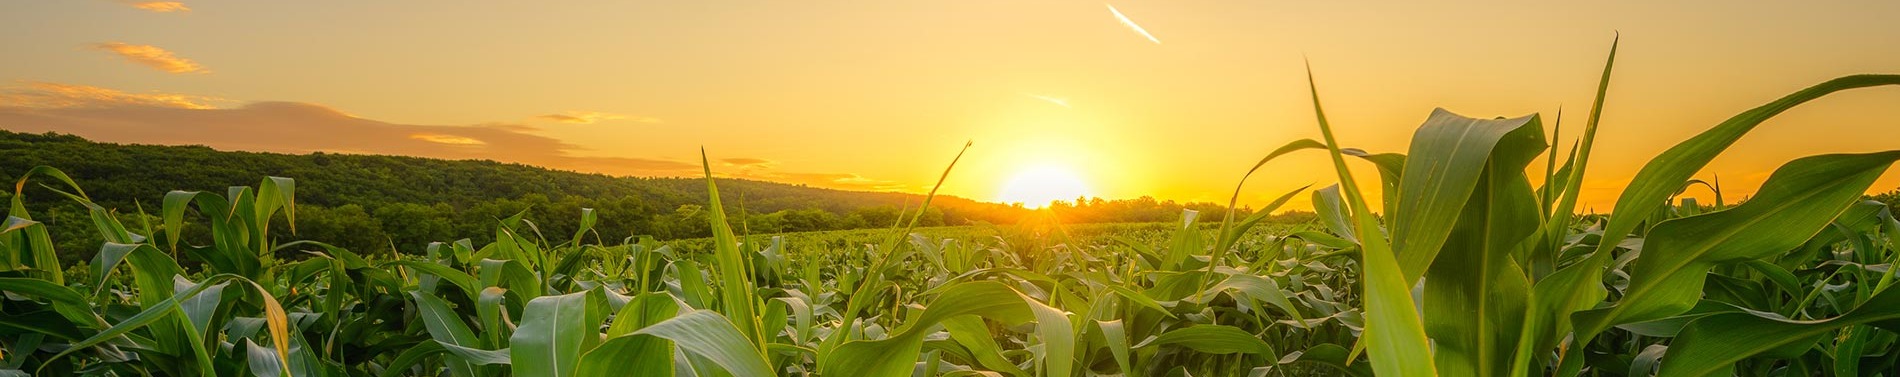 Sunset over corn field.